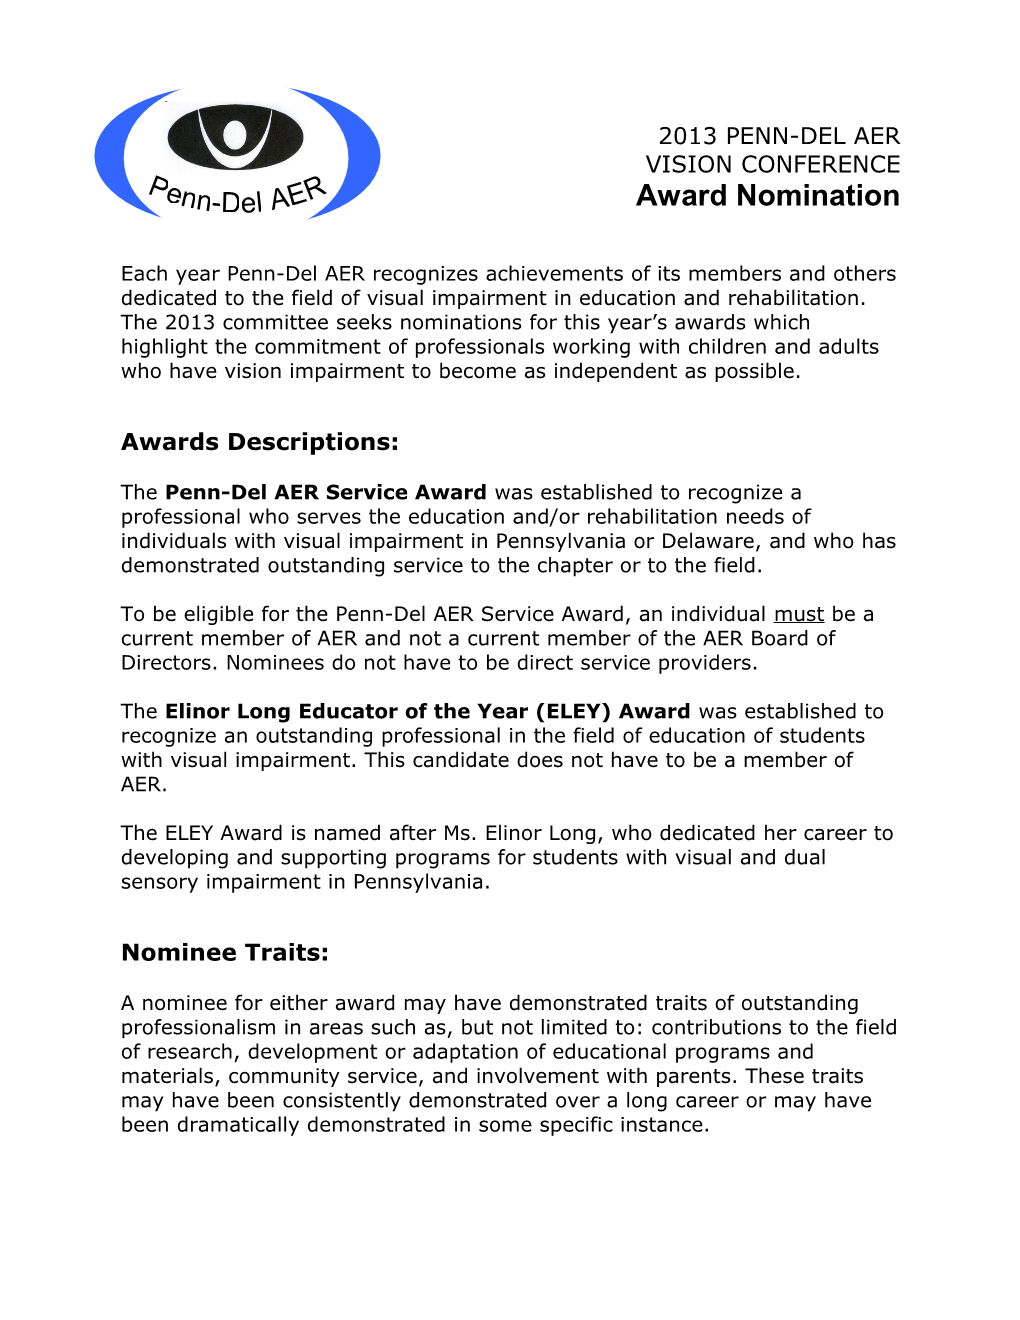 Award Nomination